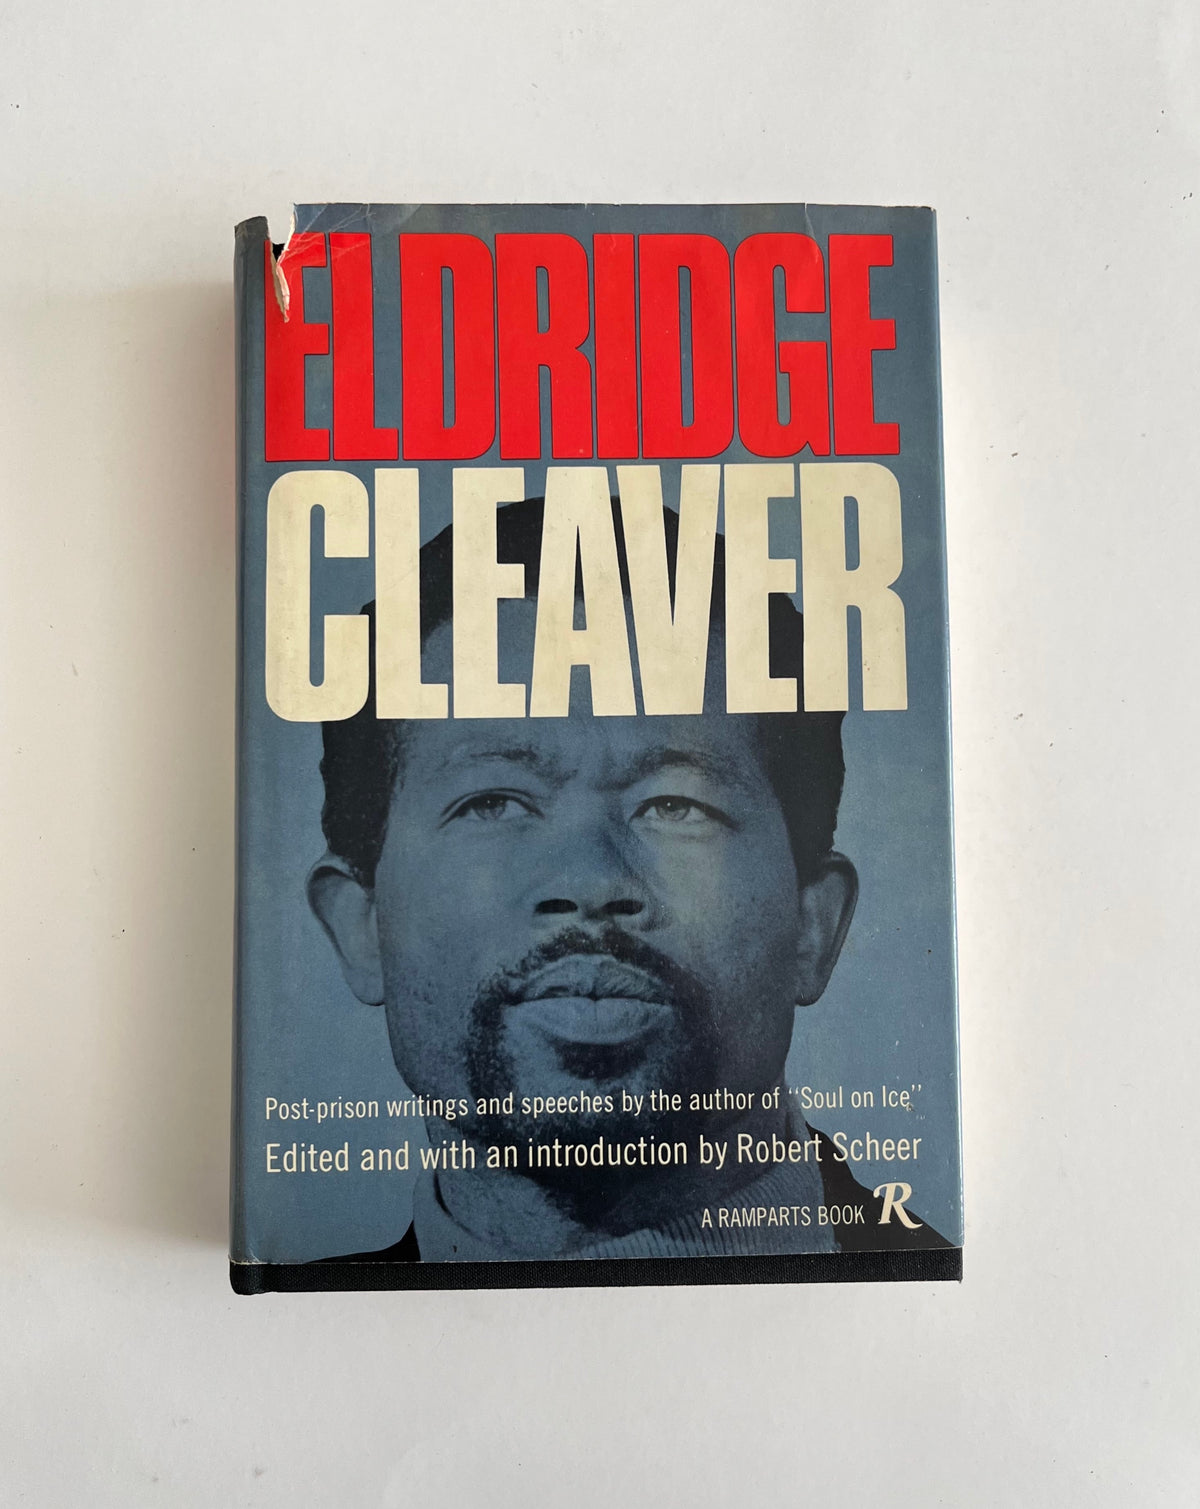 Eldridge Cleaver: Post Prison Writings and Speeches